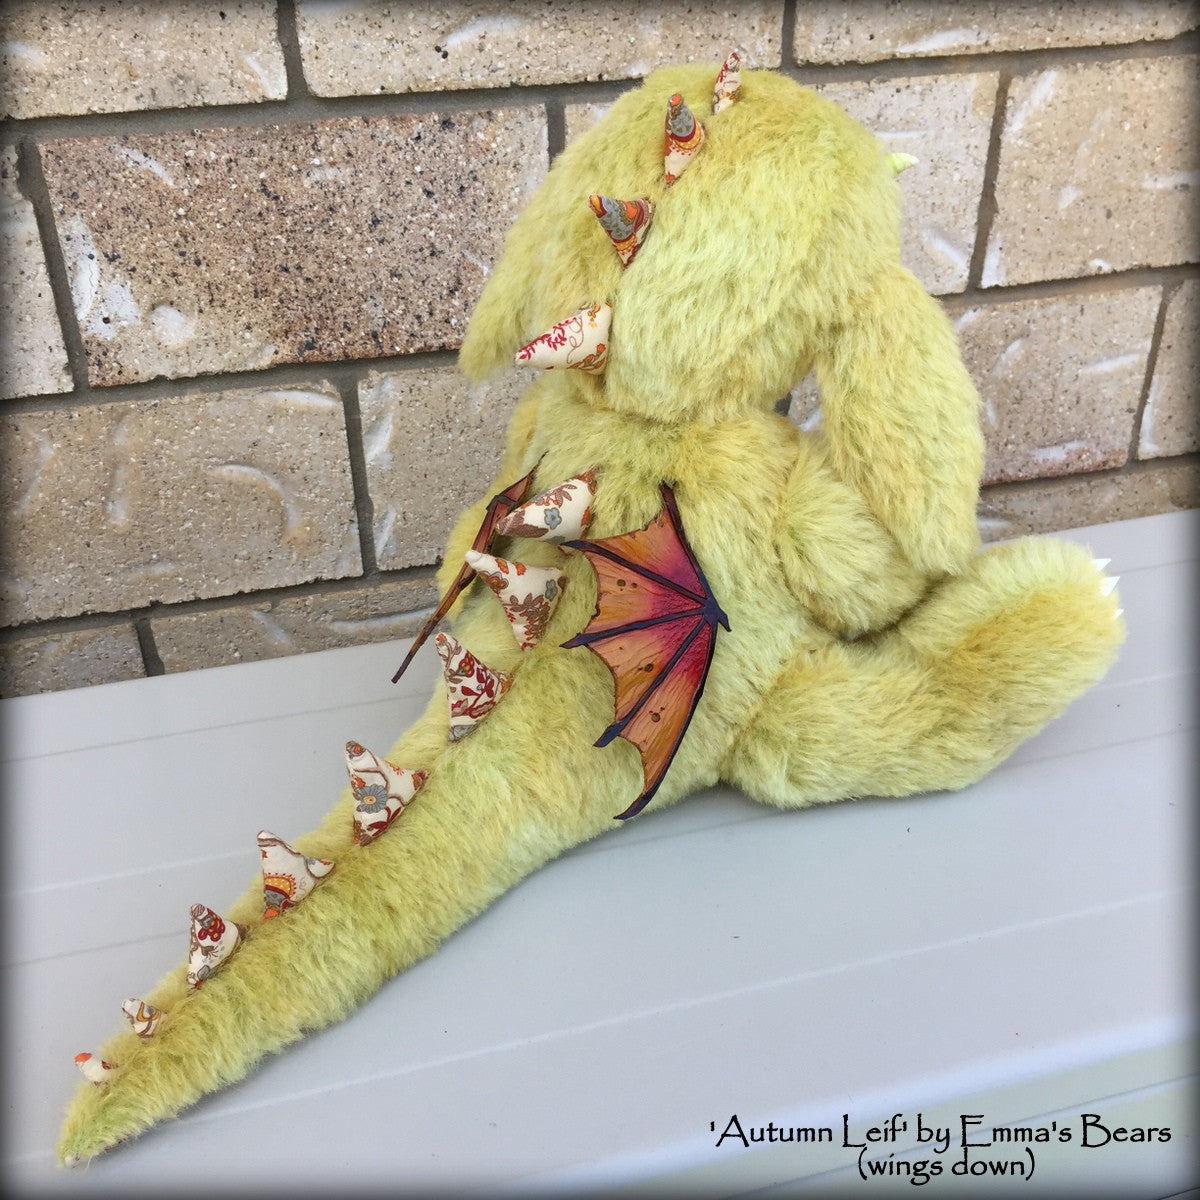 Autumn Leif DRAGON - 15in MOHAIR Artist Baby Dragon by Emmas Bears - OOAK